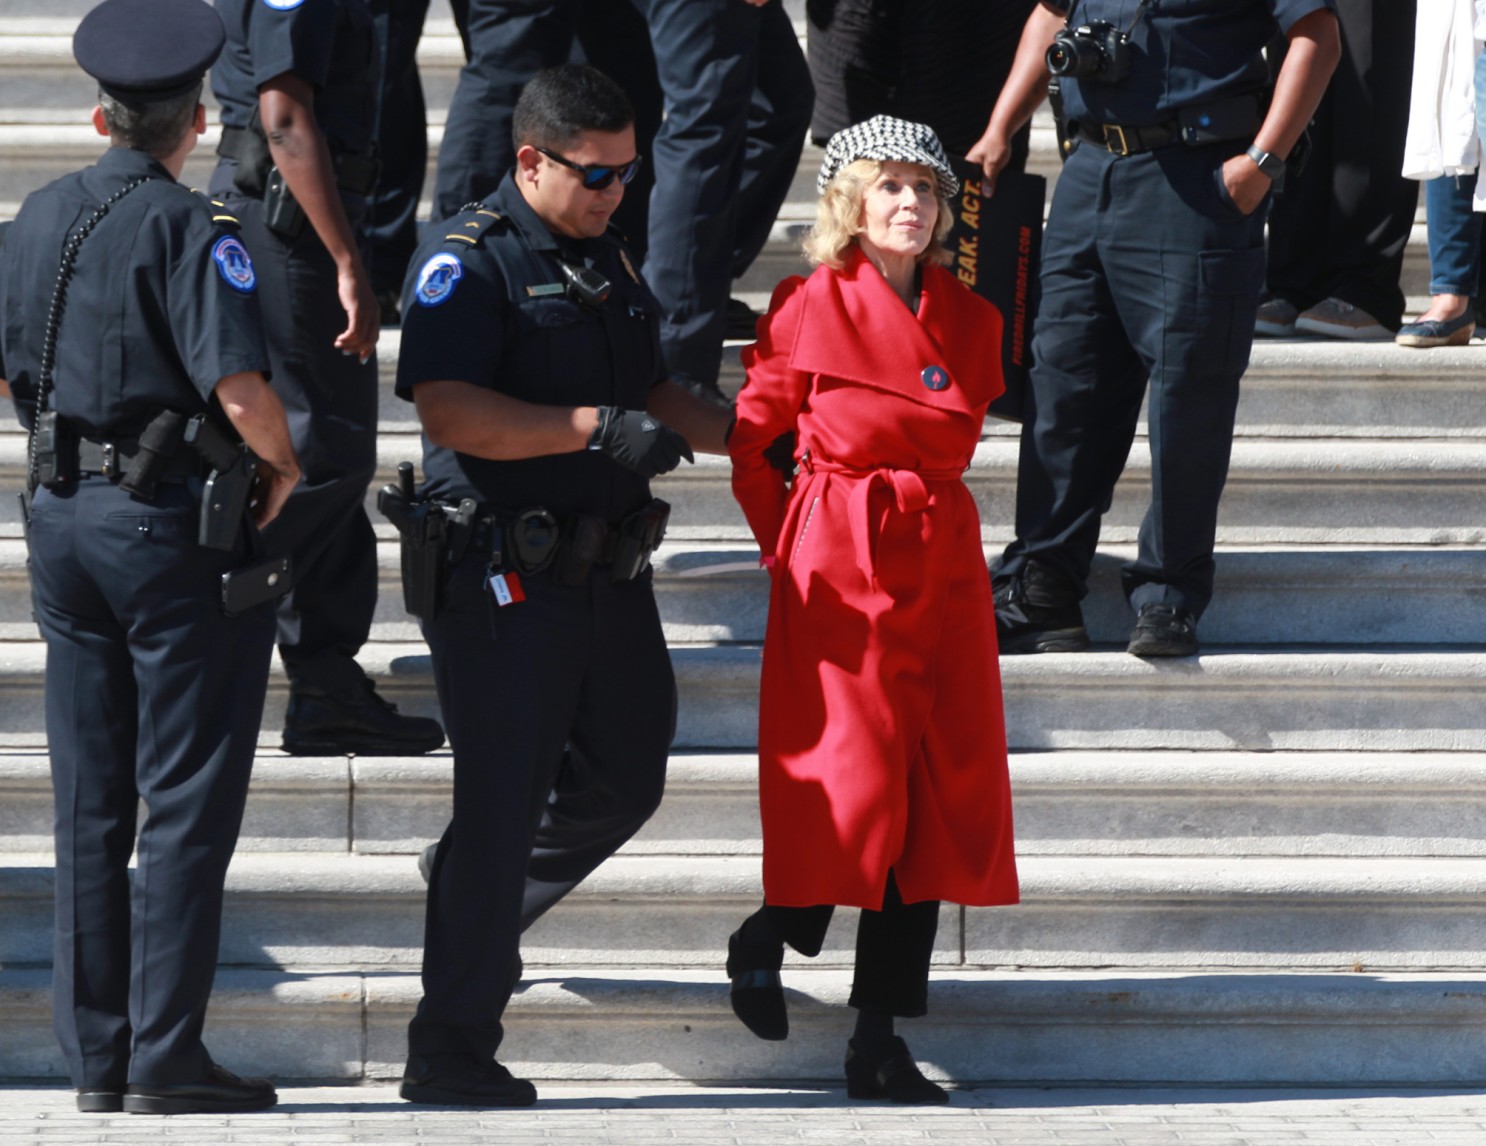 Actress, Activist, Arrestee: A Timeline of Jane Fonda